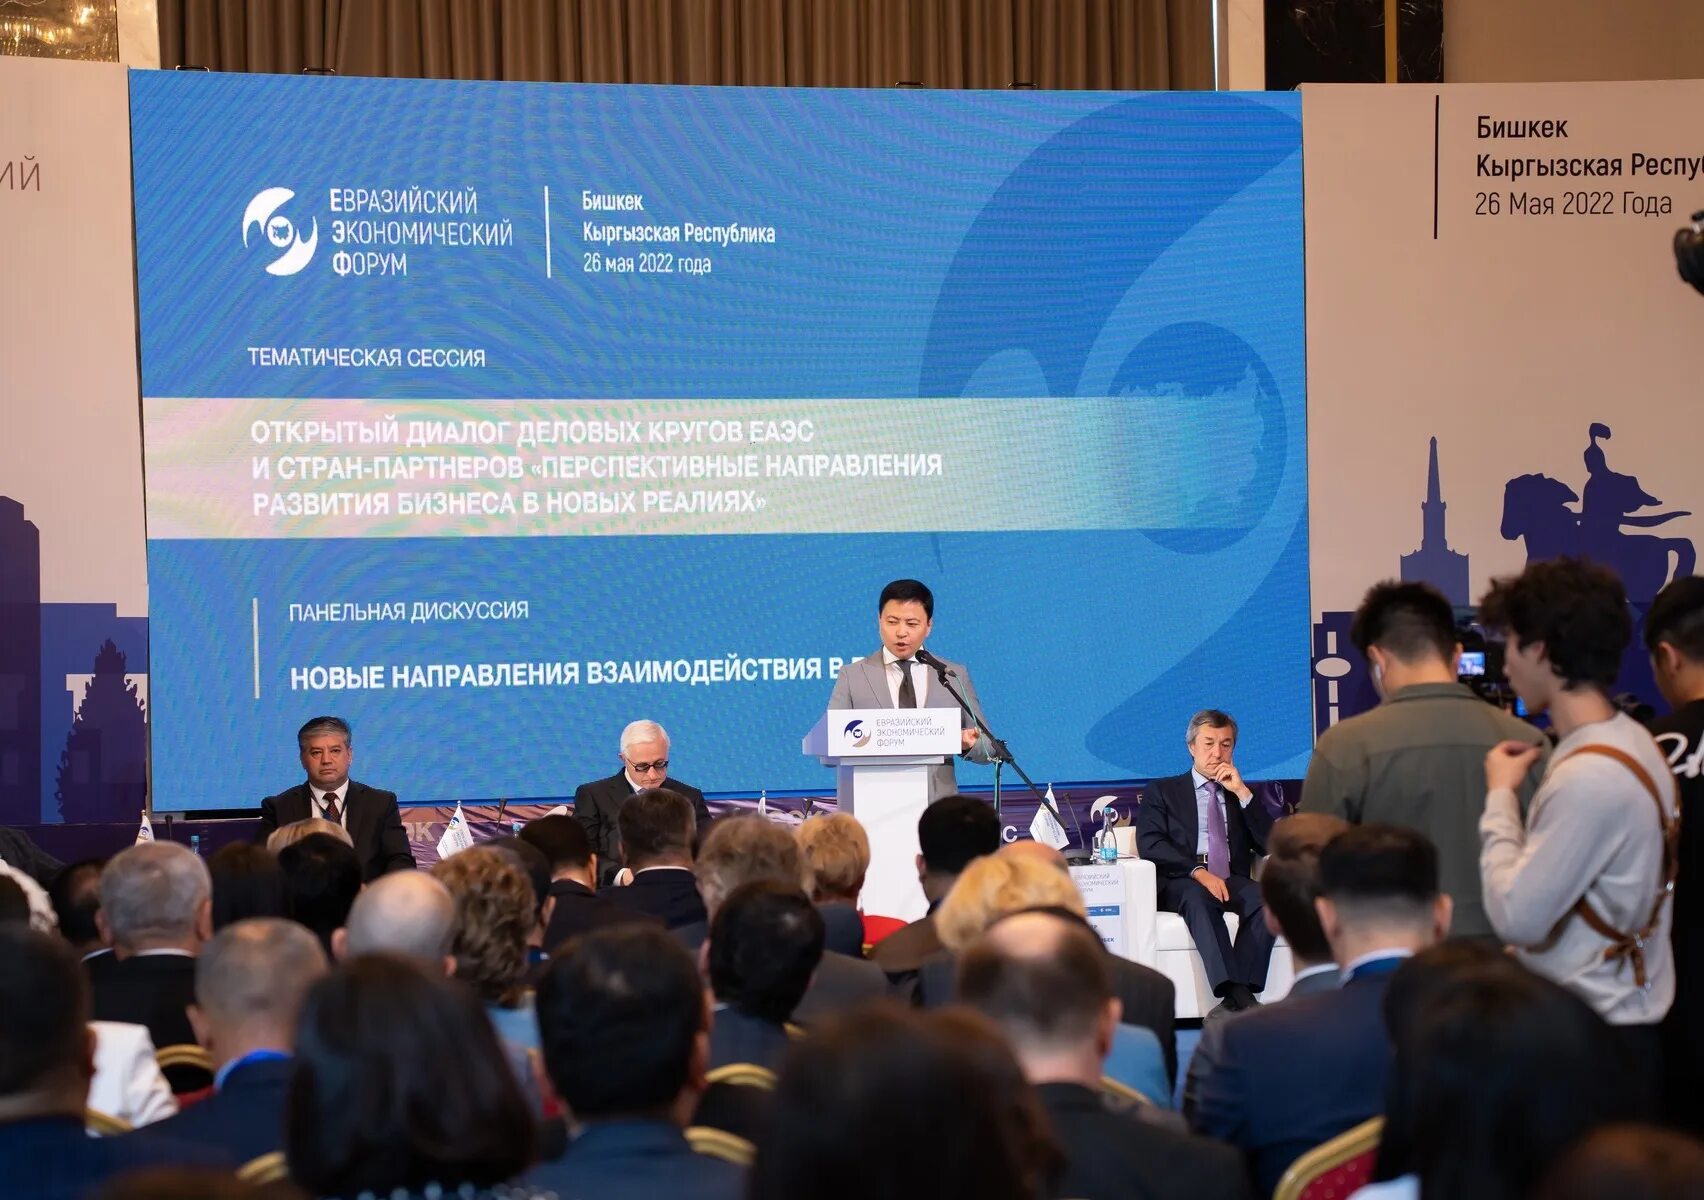 Евразийский экономический форум. Экономический форум 2022. Евразийский деловой совет. Первый Евразийский экономический форум 2022.